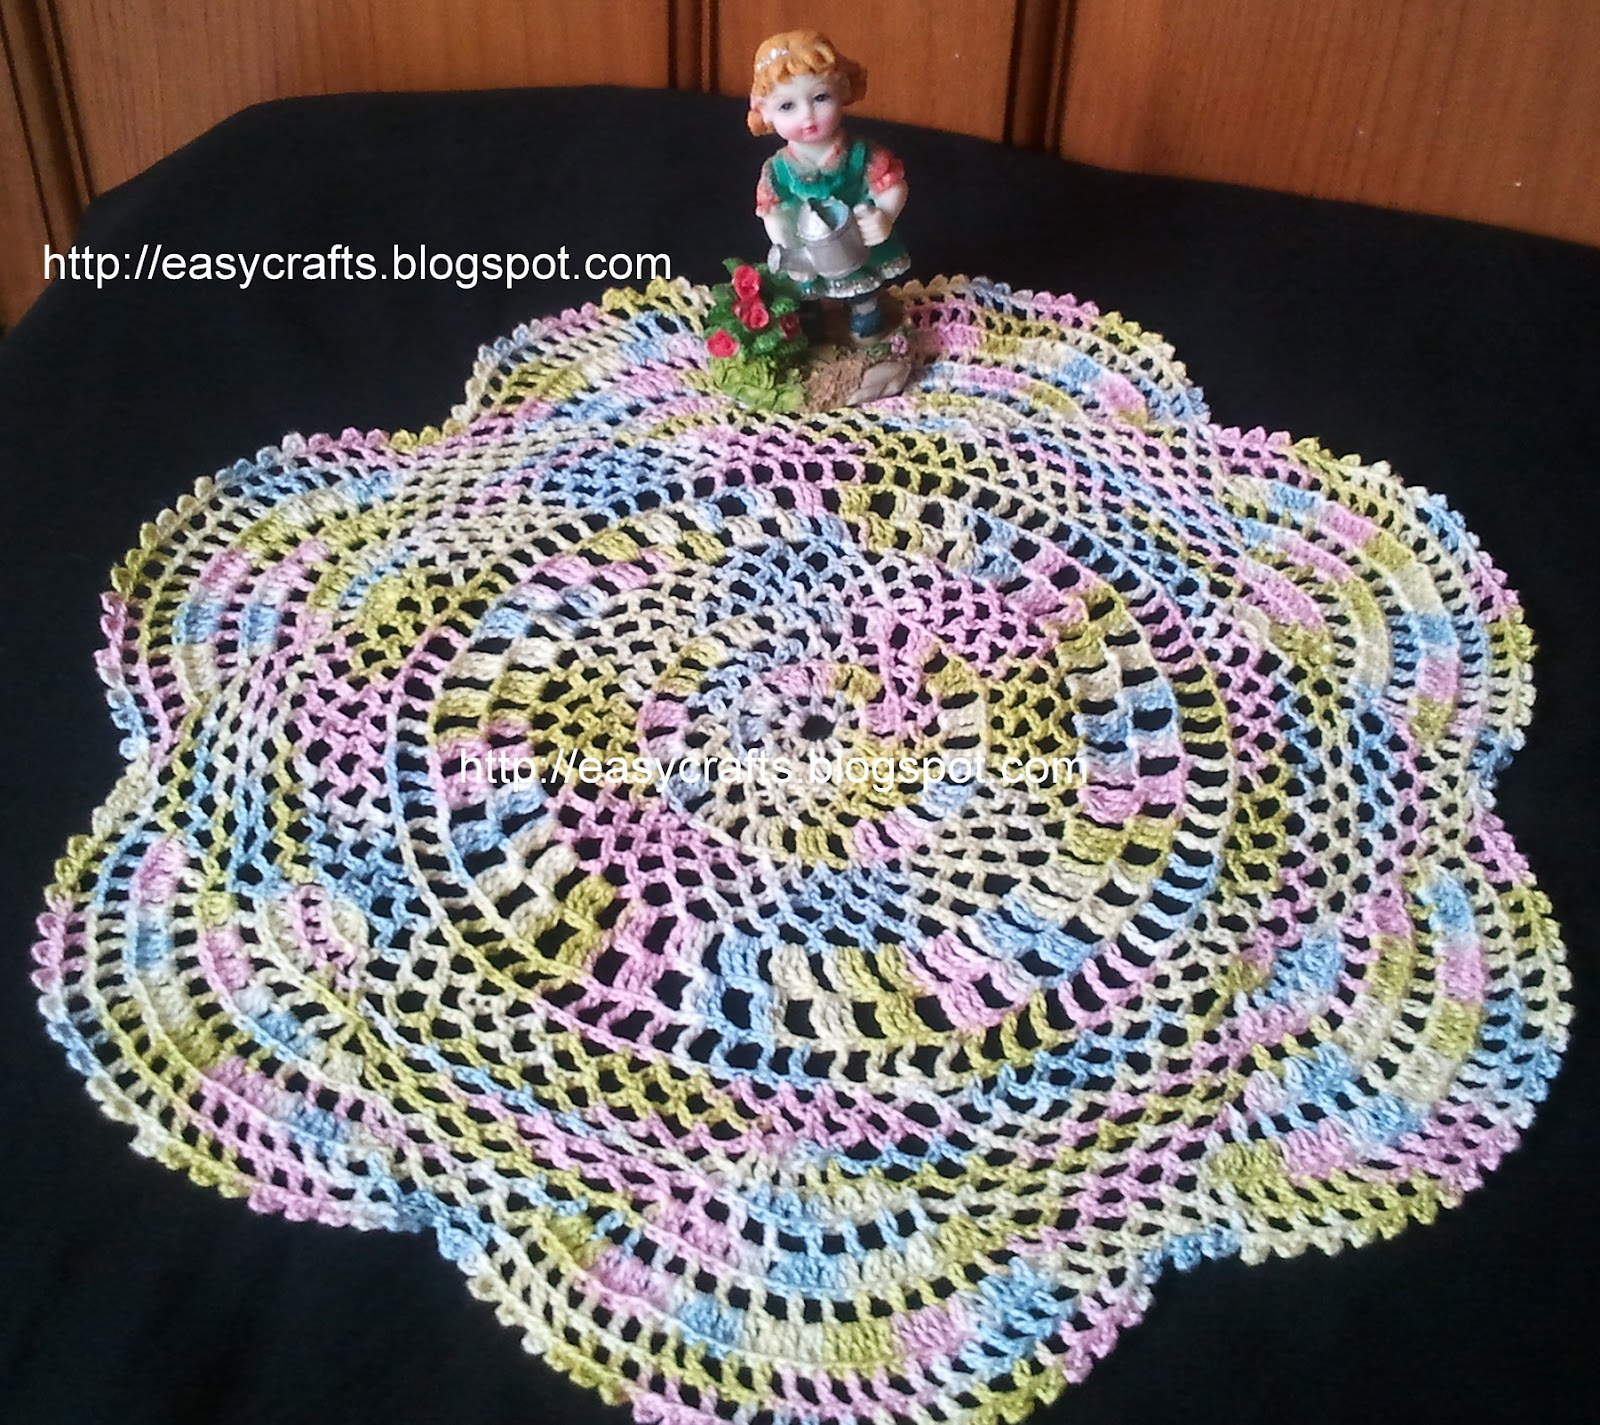 Easy Crafts Explore Your Creativity Multi Colour Crochet Doily